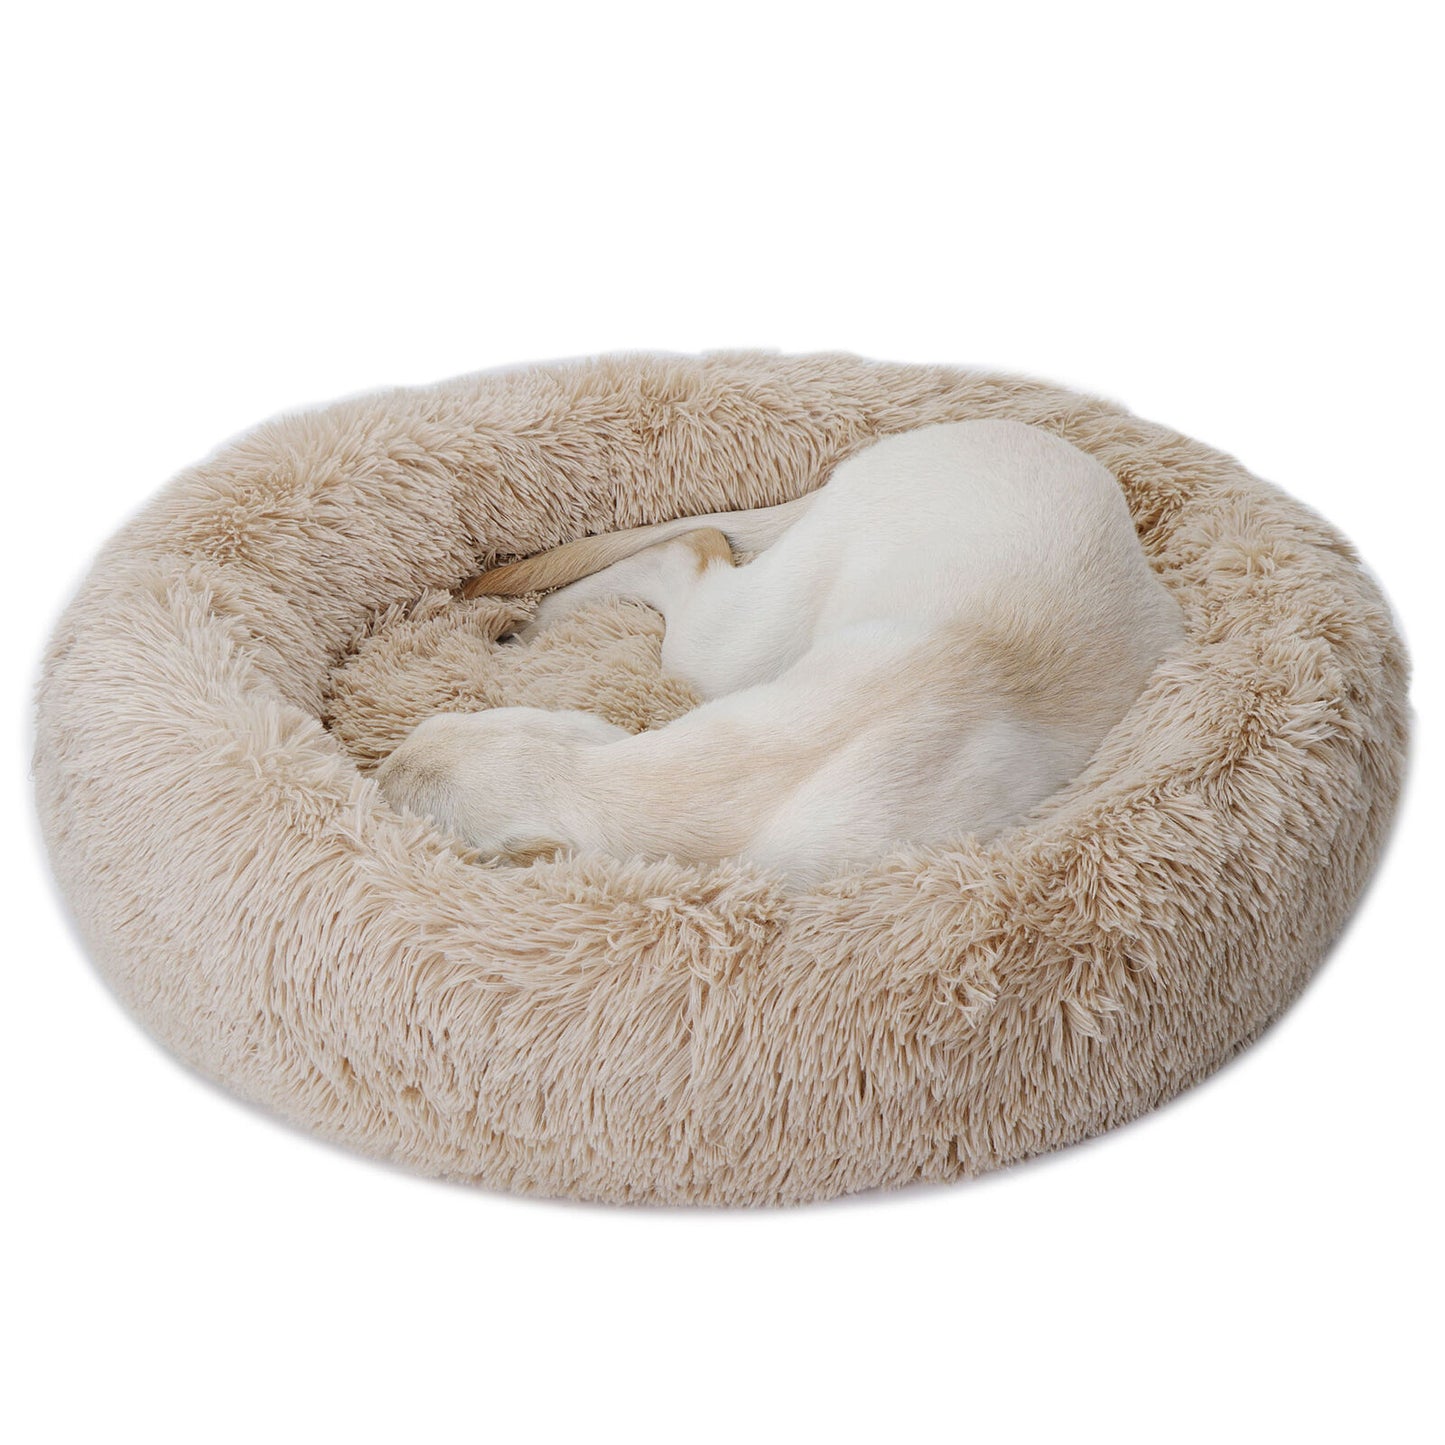 Fur Donut Cuddler Pet Calming Bed Dog Beds Soft Warmer Medium Small Dogs Cats